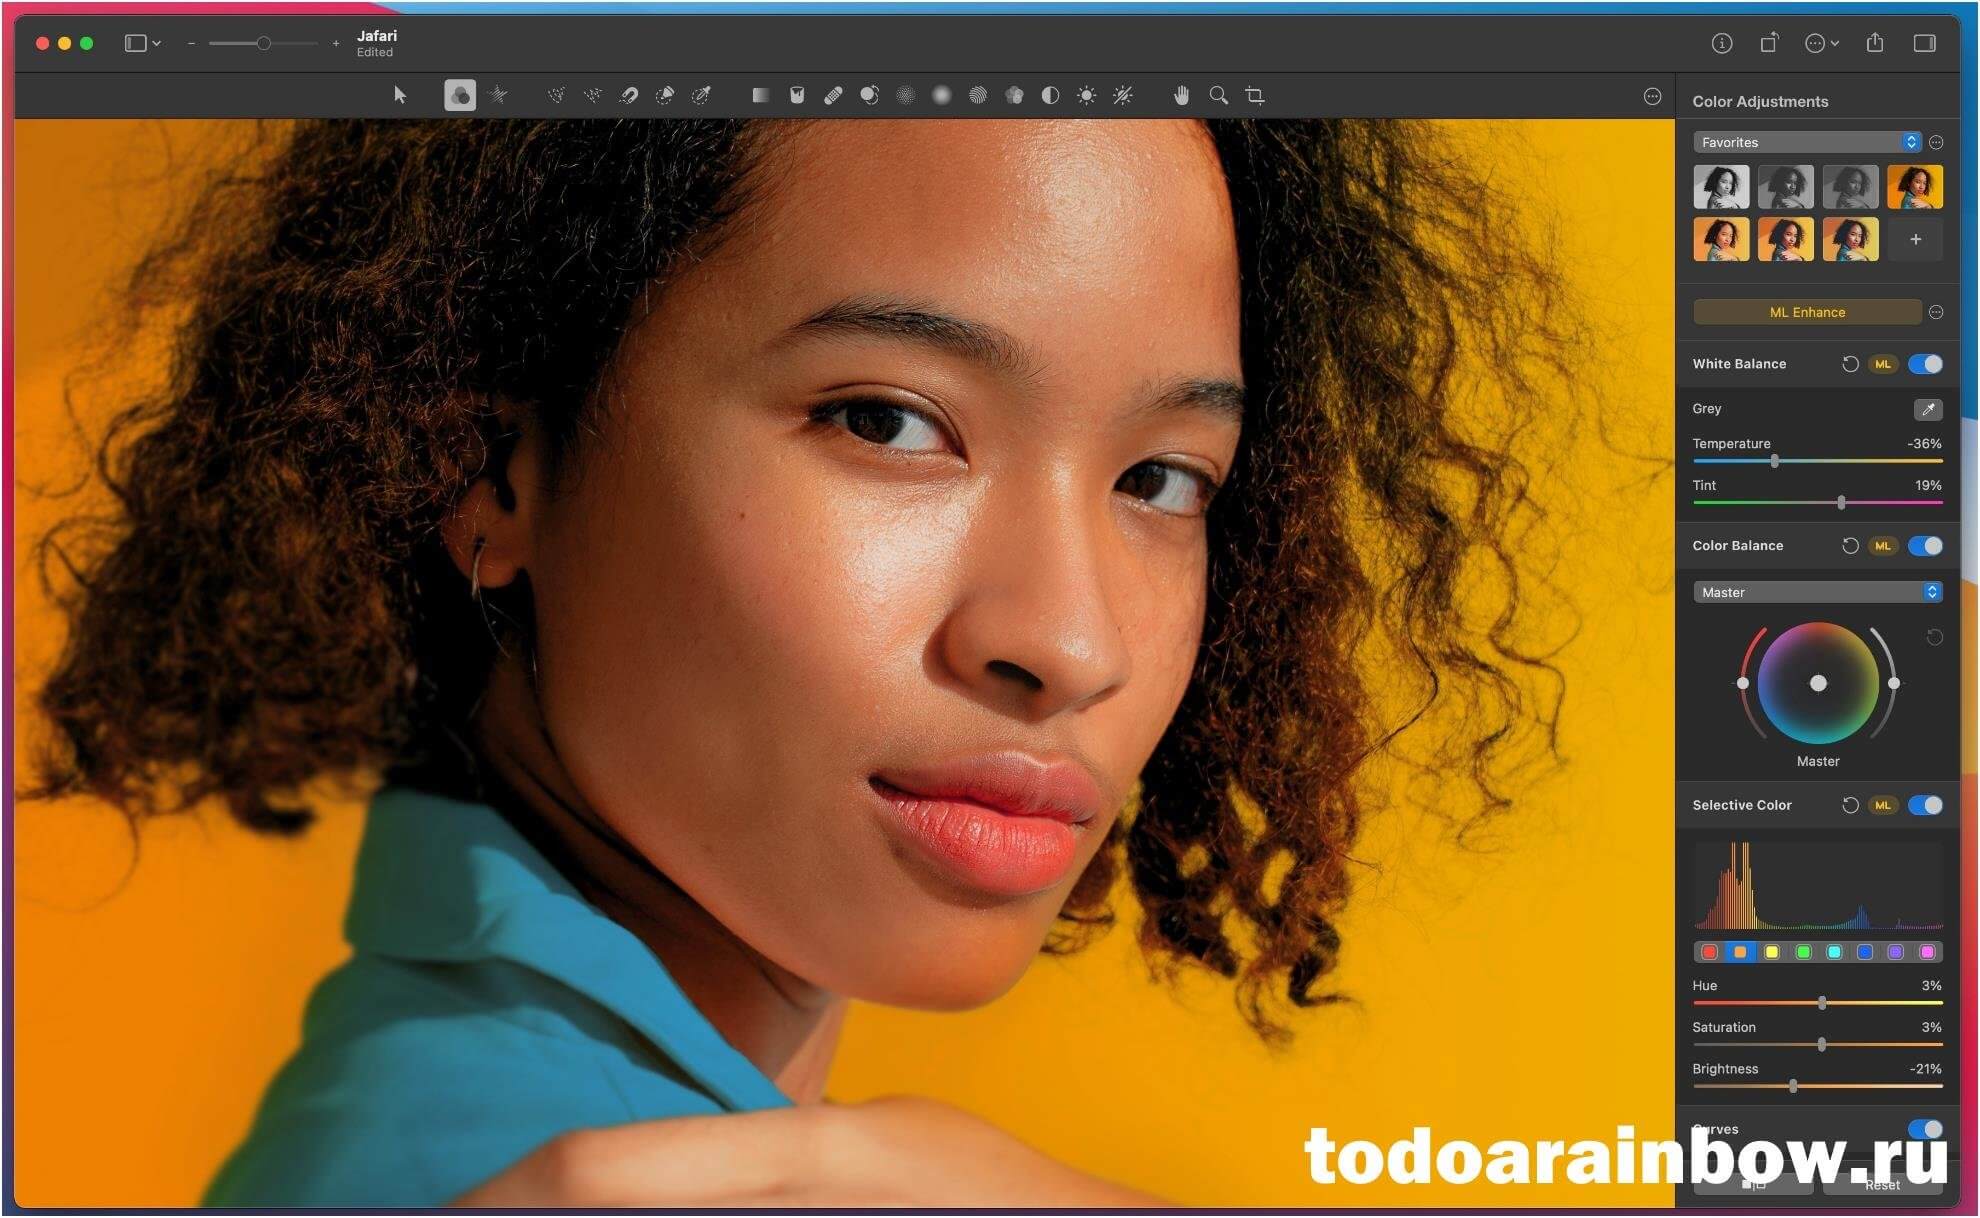 Pixelmator - дешёвый аналог Adobe Photoshop. Скачать бесплатно Pixelmator Pro на Windows торрент torrent